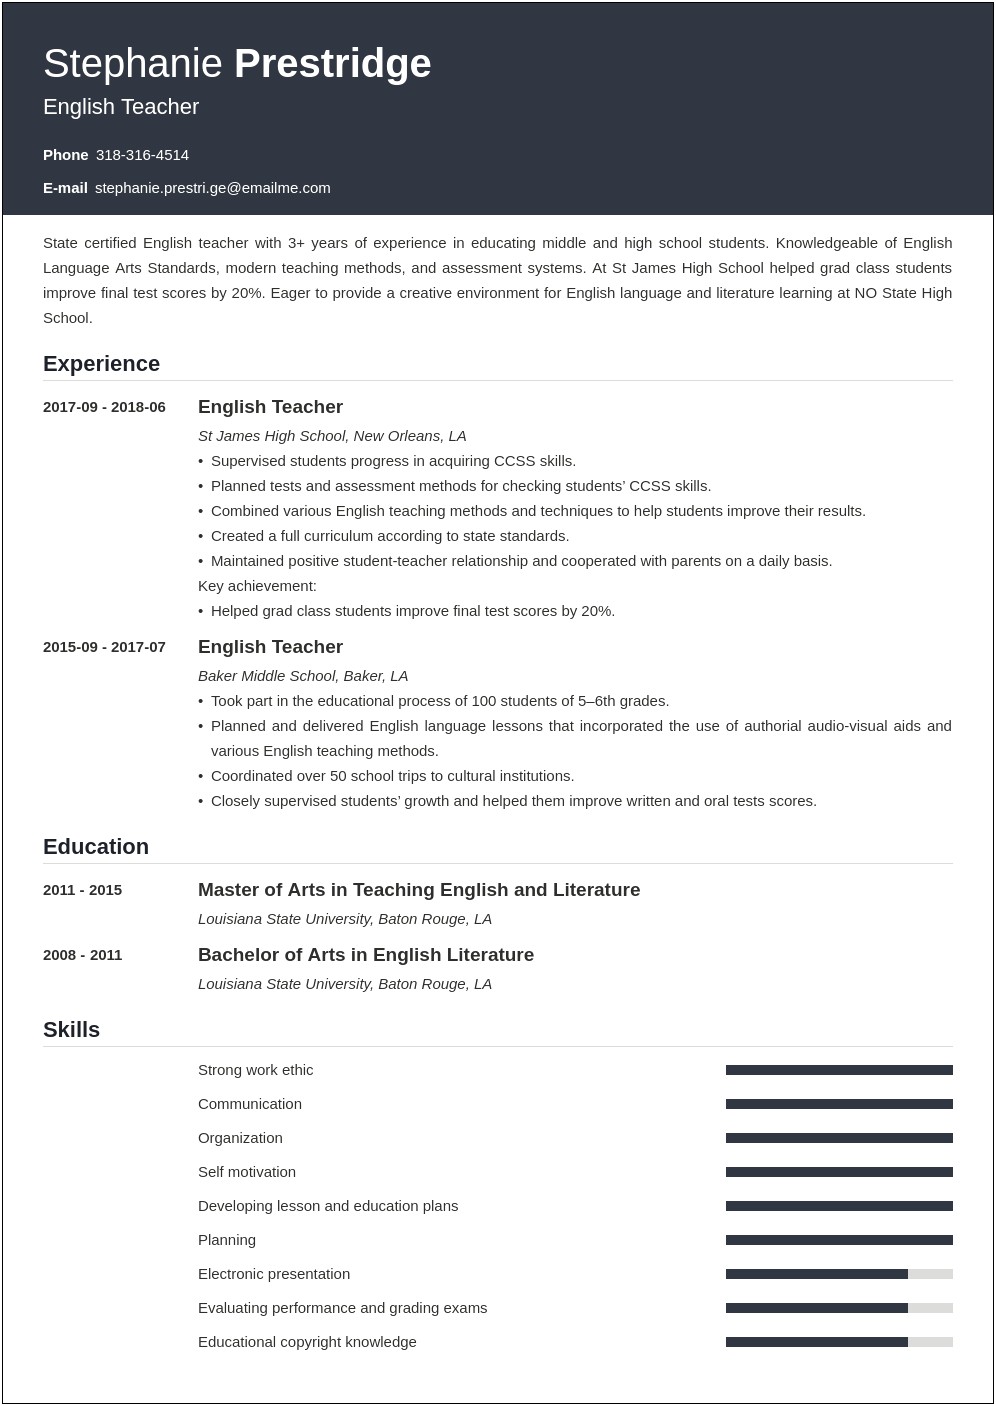 Sample Resume For The Post Of English Teacher